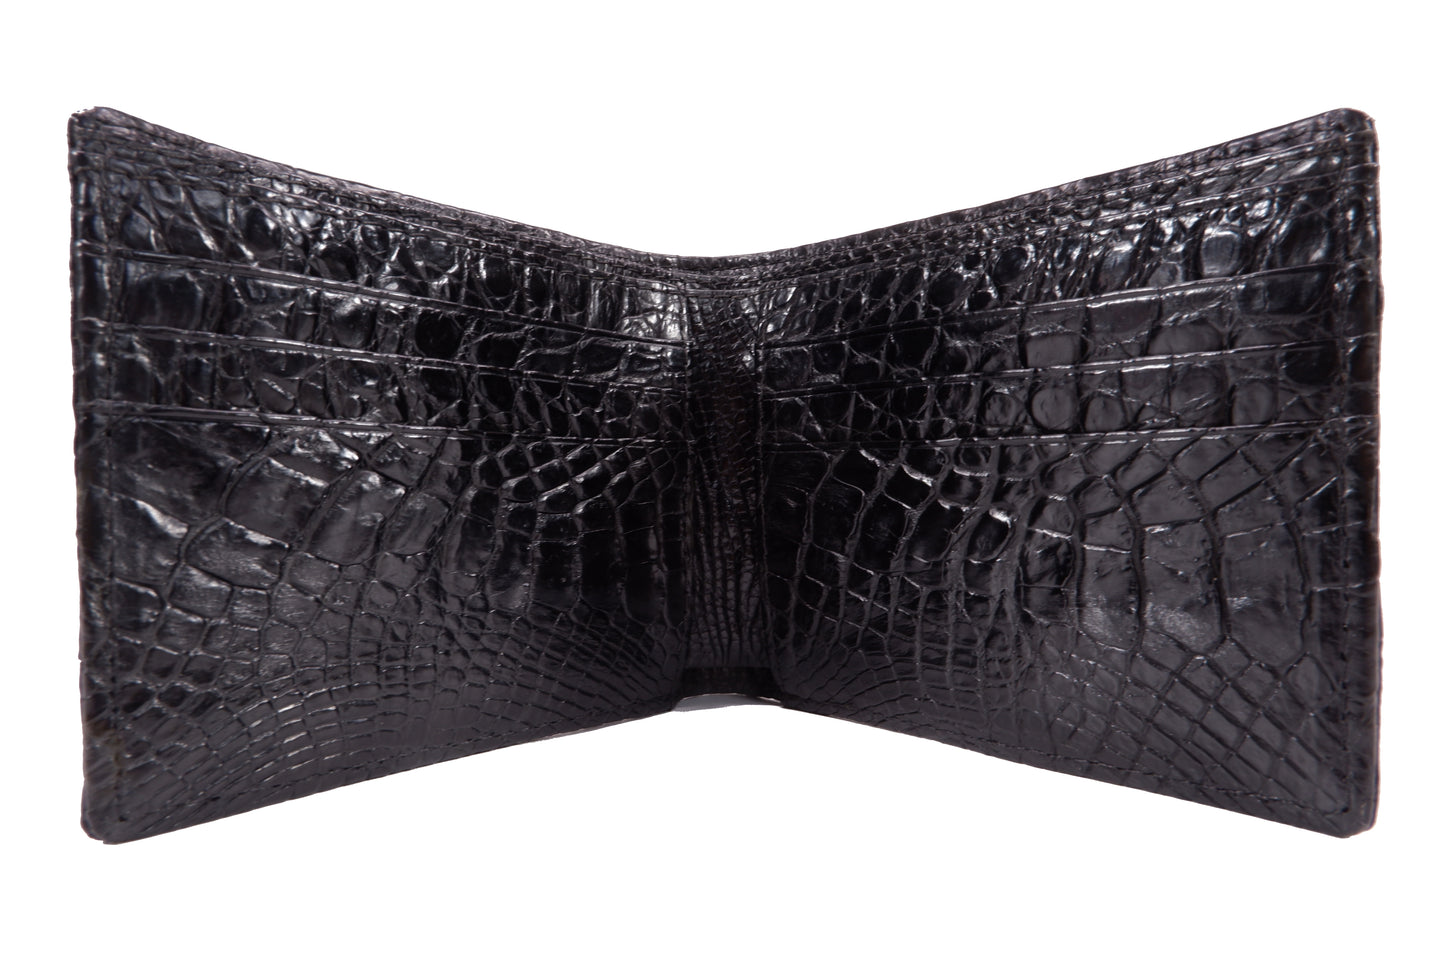 Genuine Crocodile Belly Skin Leather Bifold Wallet with Crocodile Skin Interior